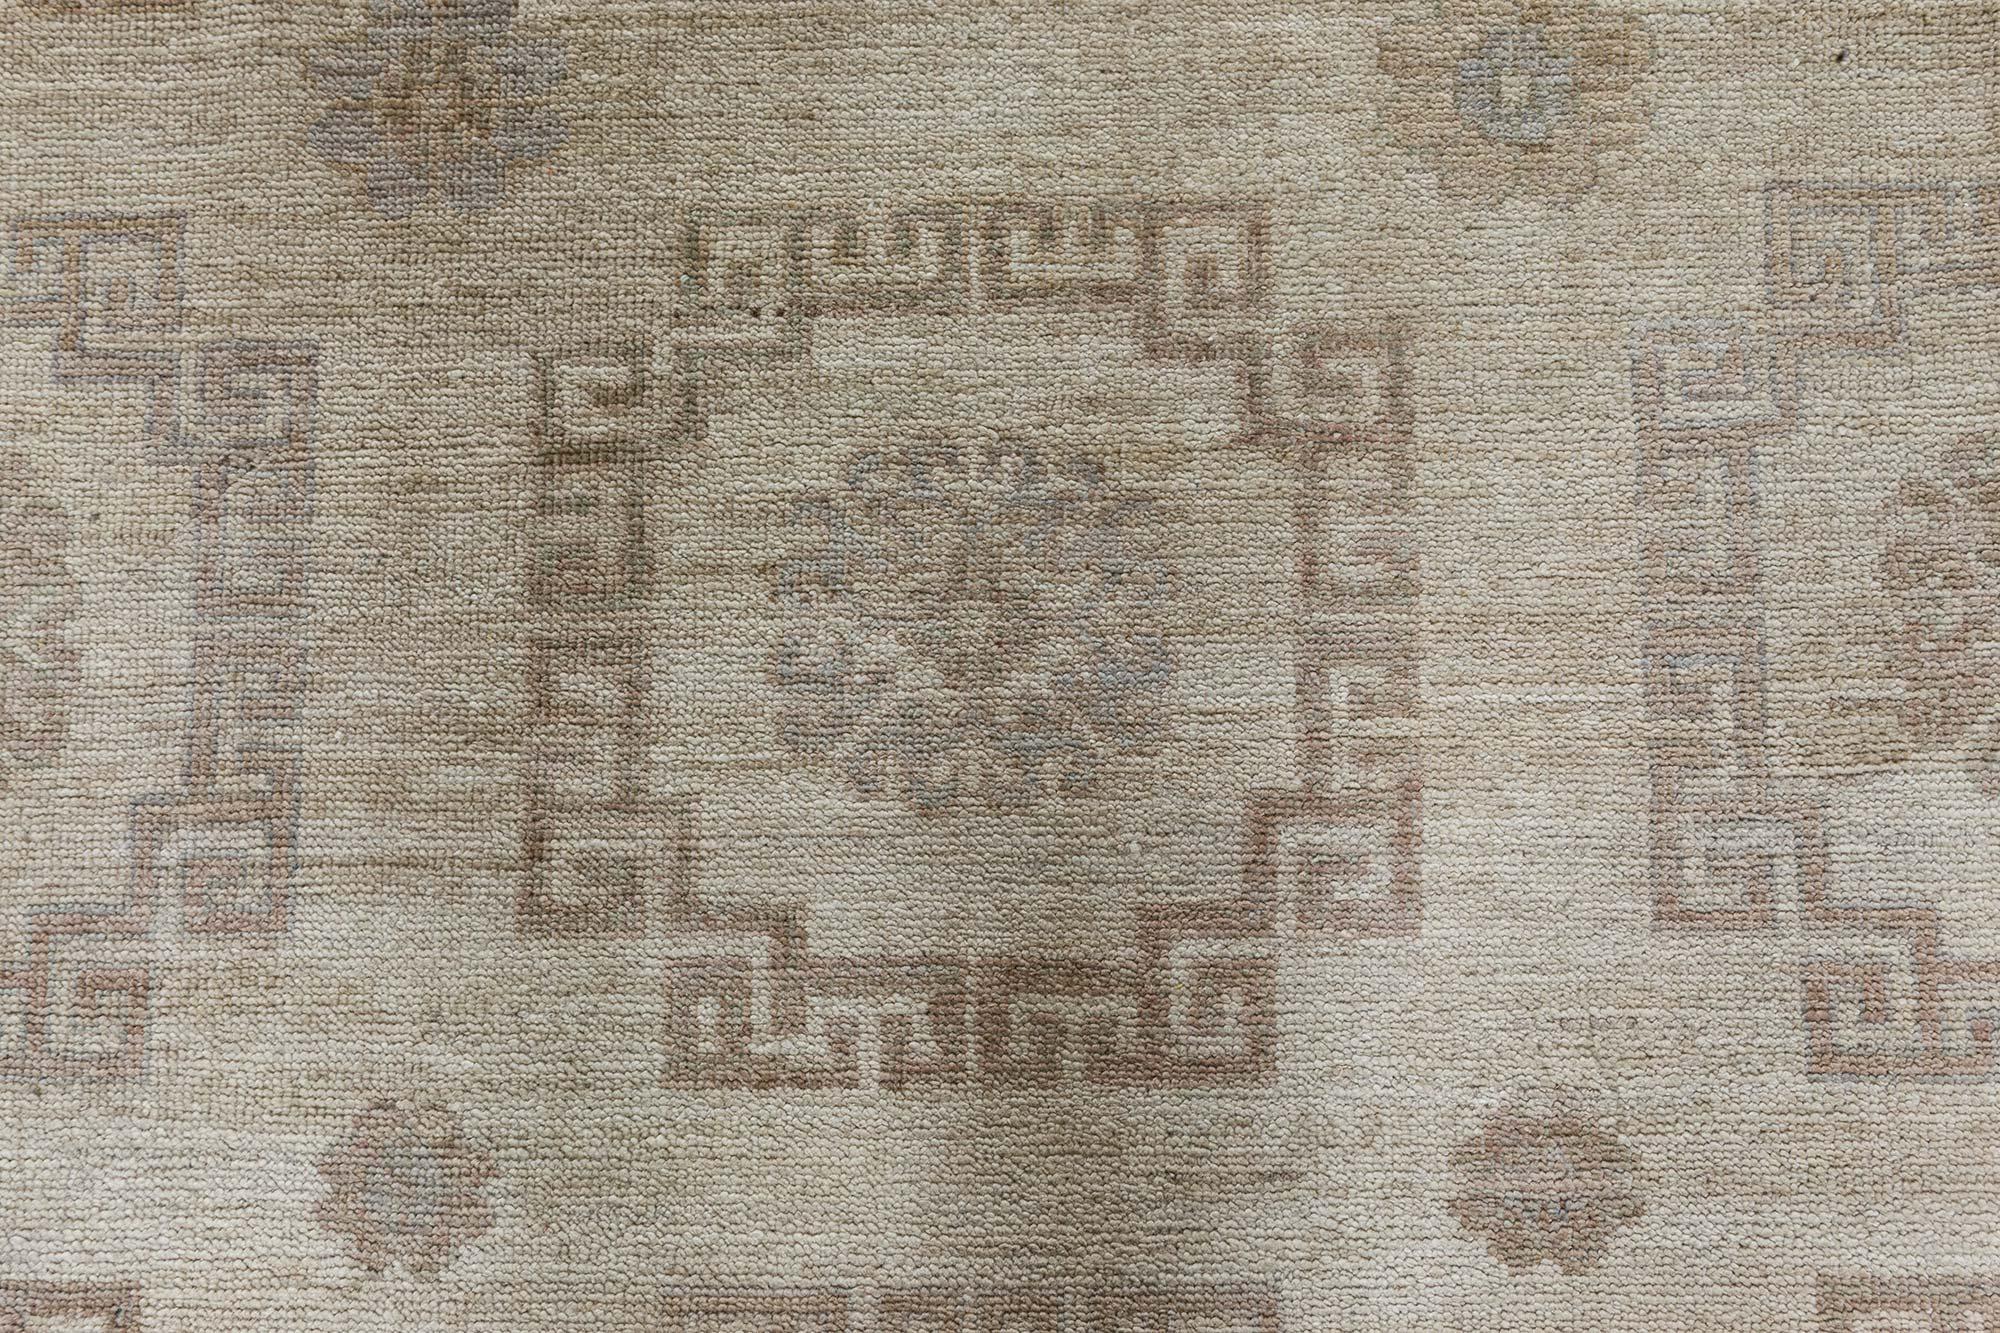 Large Samarkand style geometric hand knotted wool rug by Doris Leslie Blau.
Size: 14'7